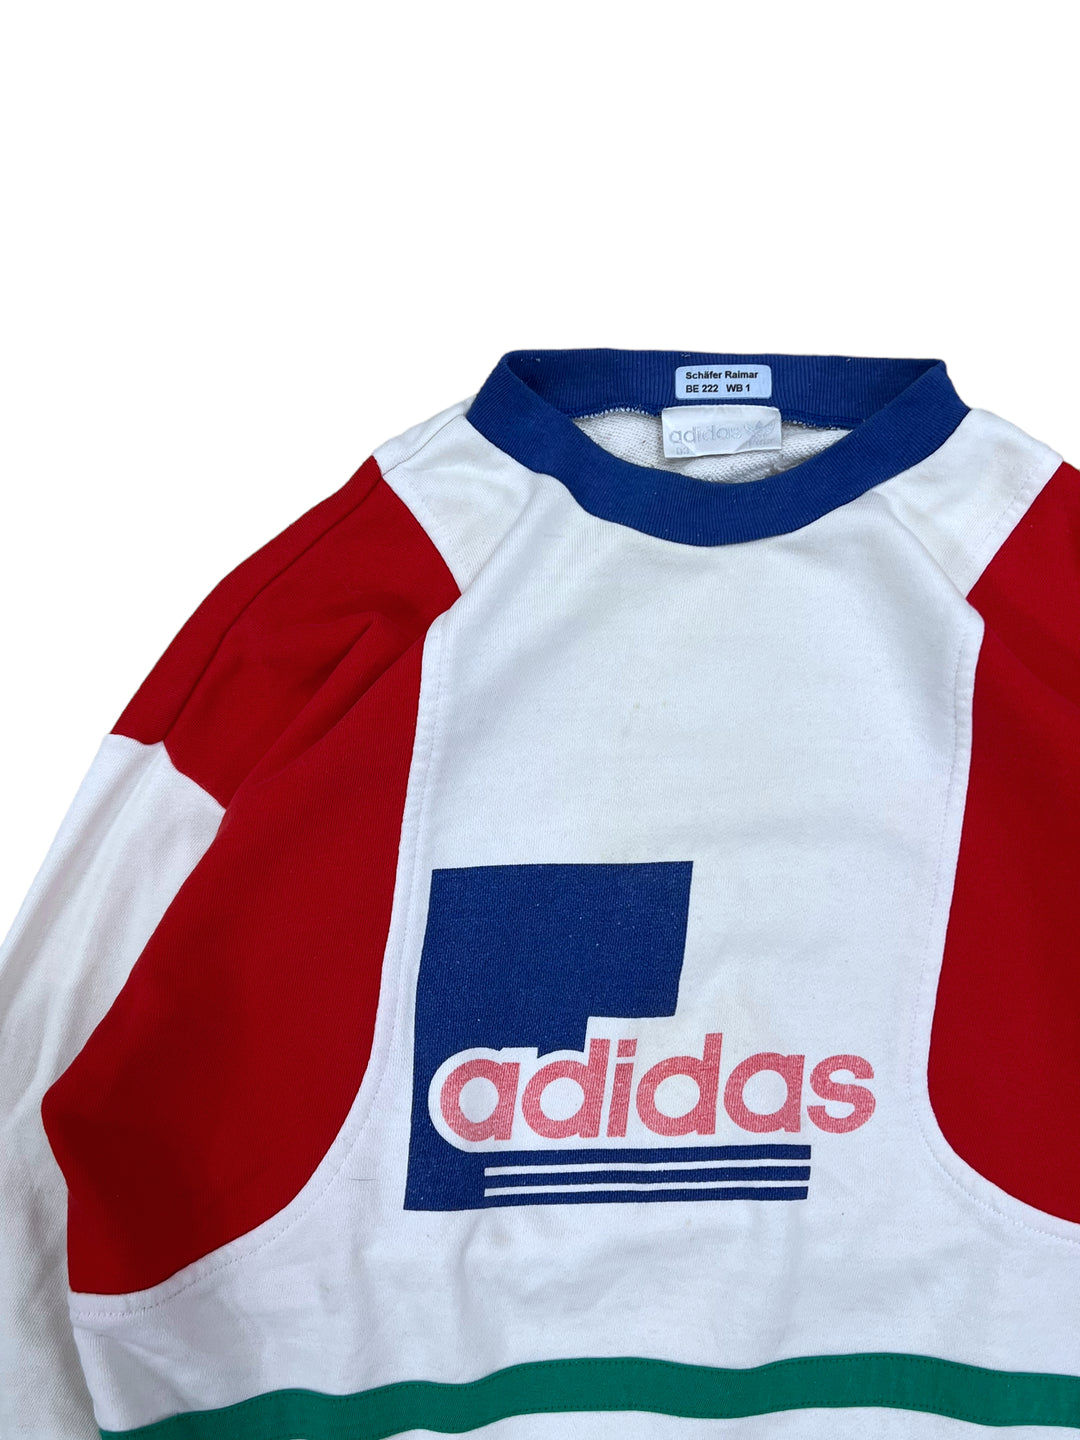 Vintage 90’s Adidas Trefoil Crewneck Men’s Small